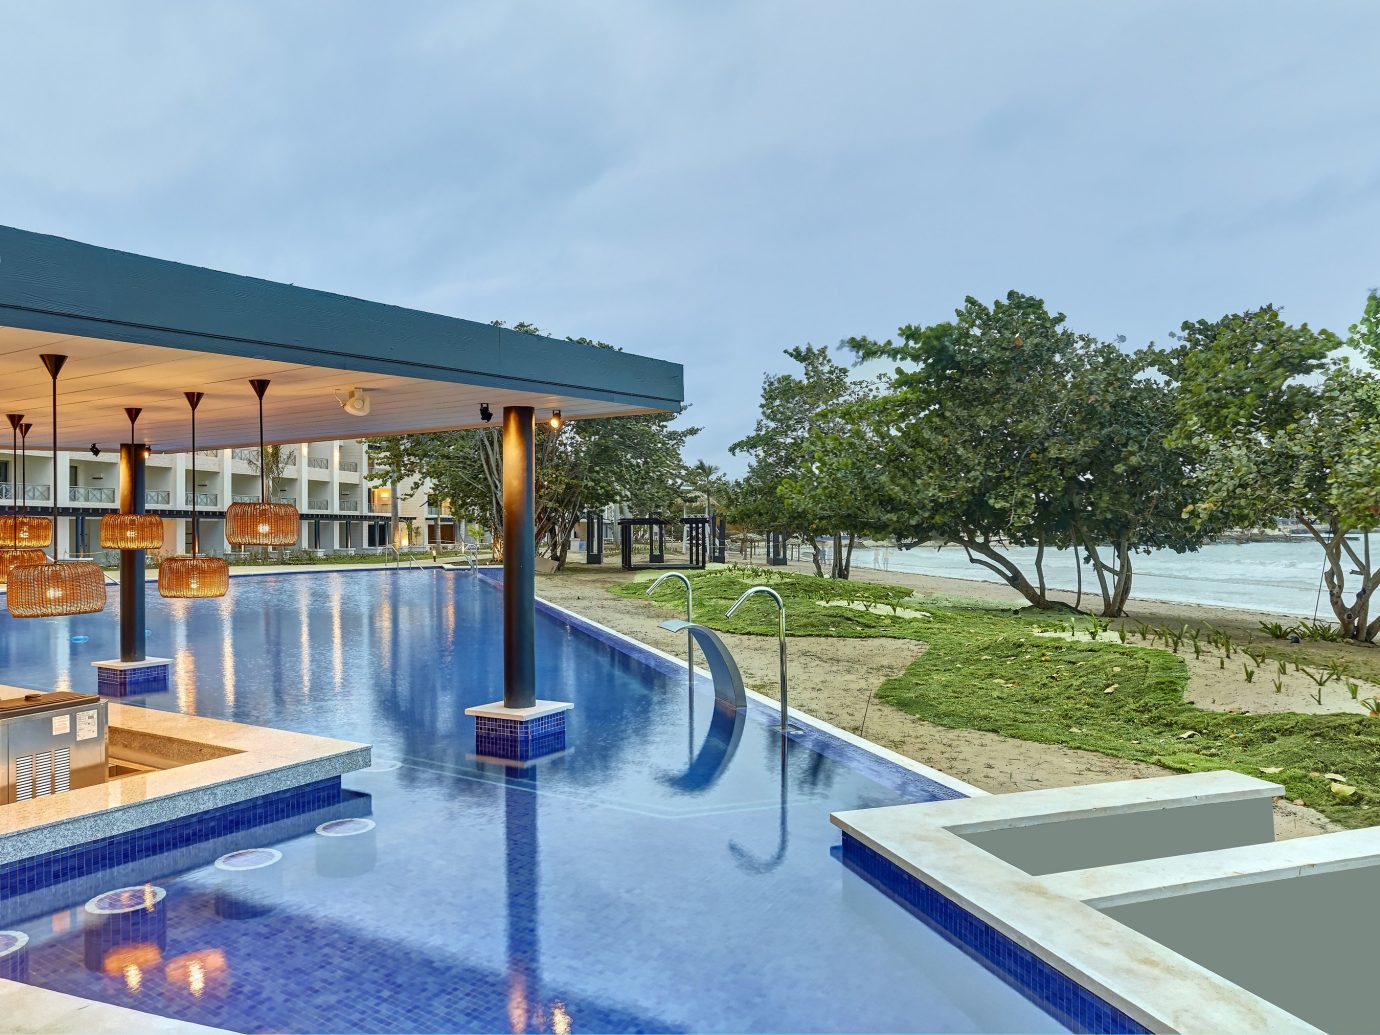 Hotels sky outdoor leisure swimming pool property Resort estate vacation real estate Villa home condominium backyard shore